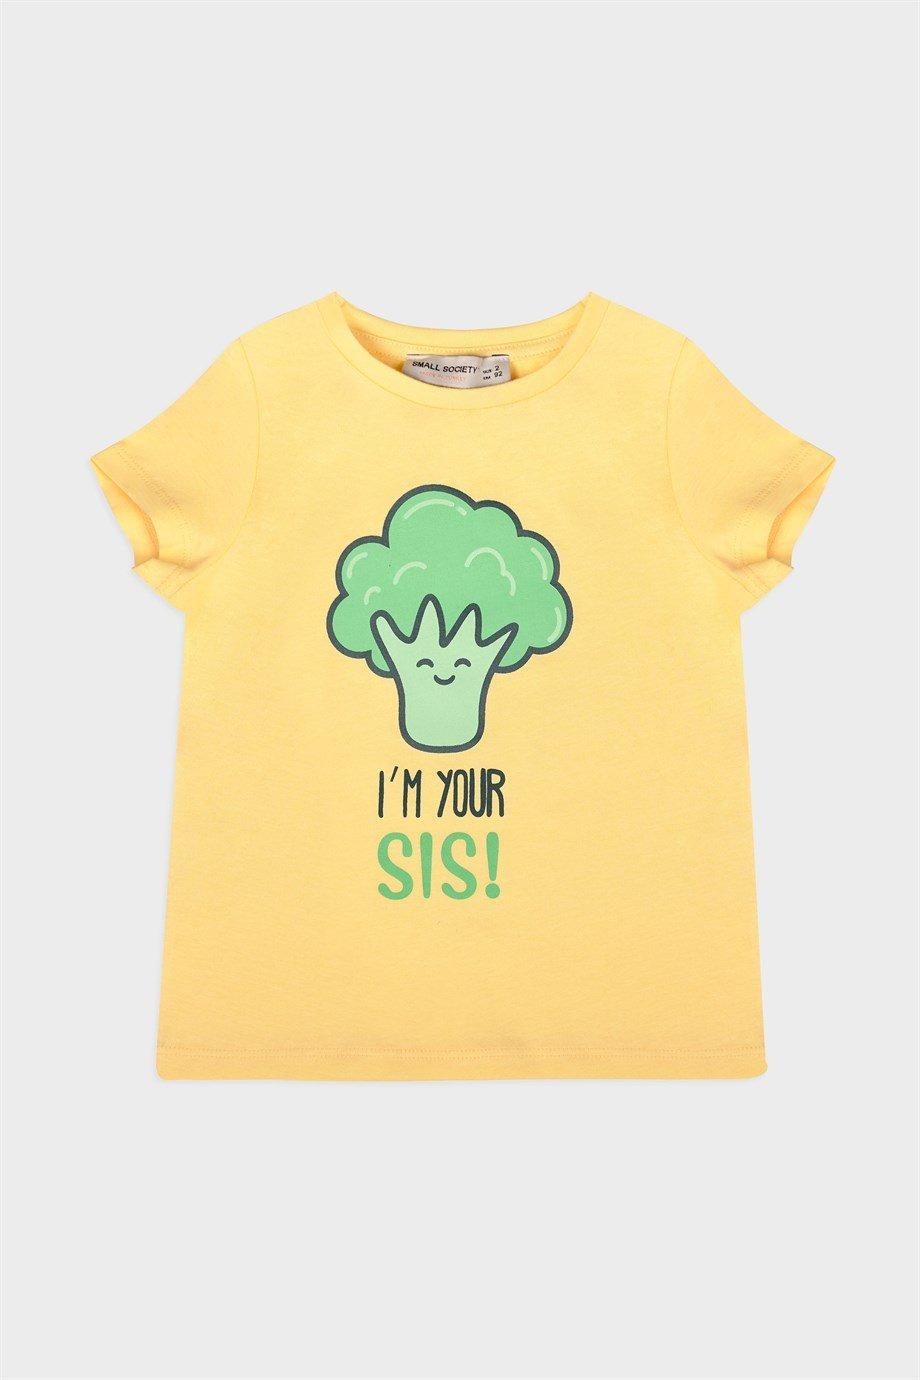 Small Society Yellow Broccoli Printed T-Shirt for Girl